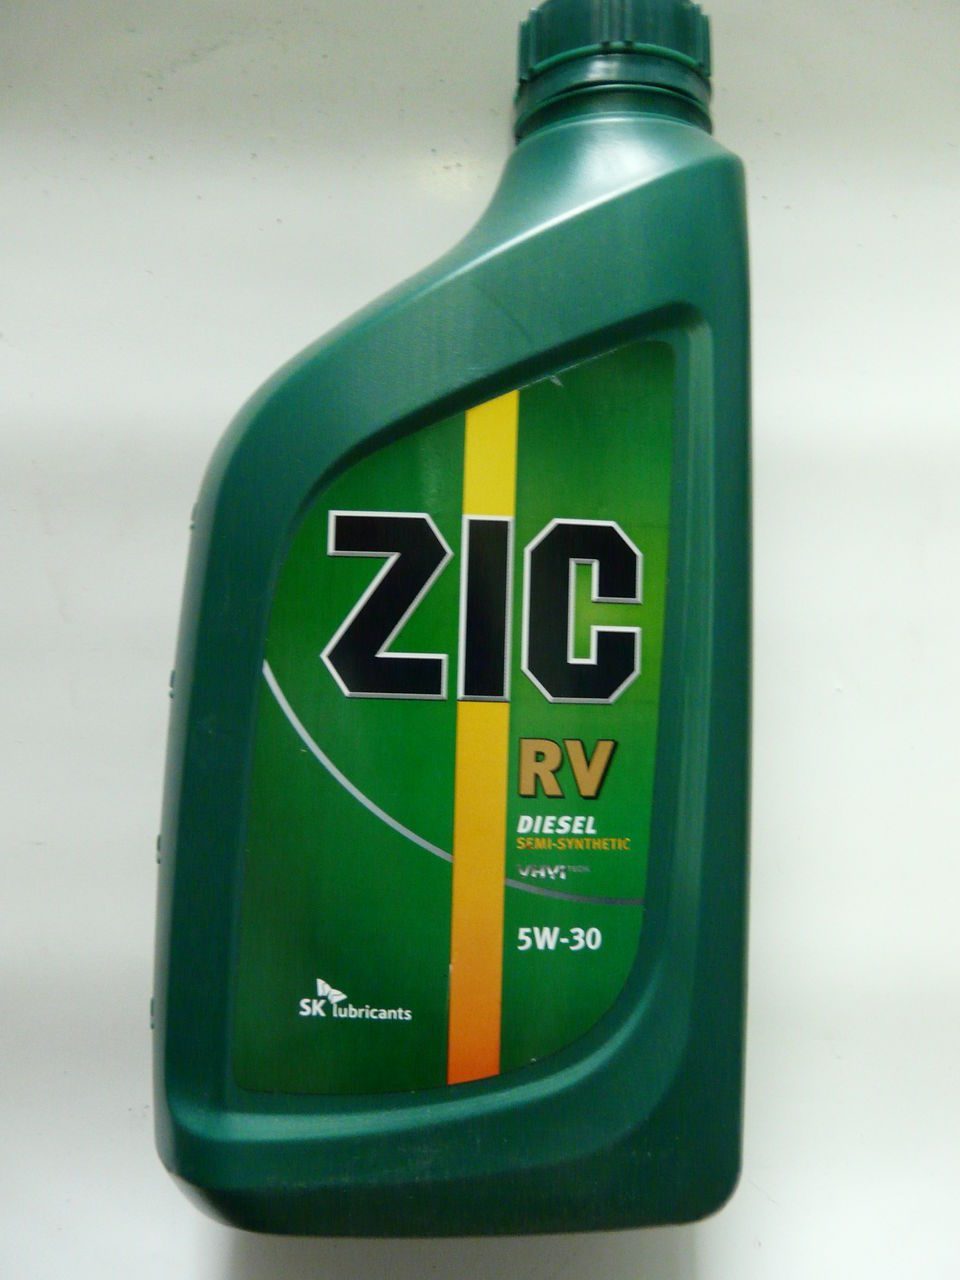 ZIC X7 DIESEL 5W30 1L синтетическое моторное масло